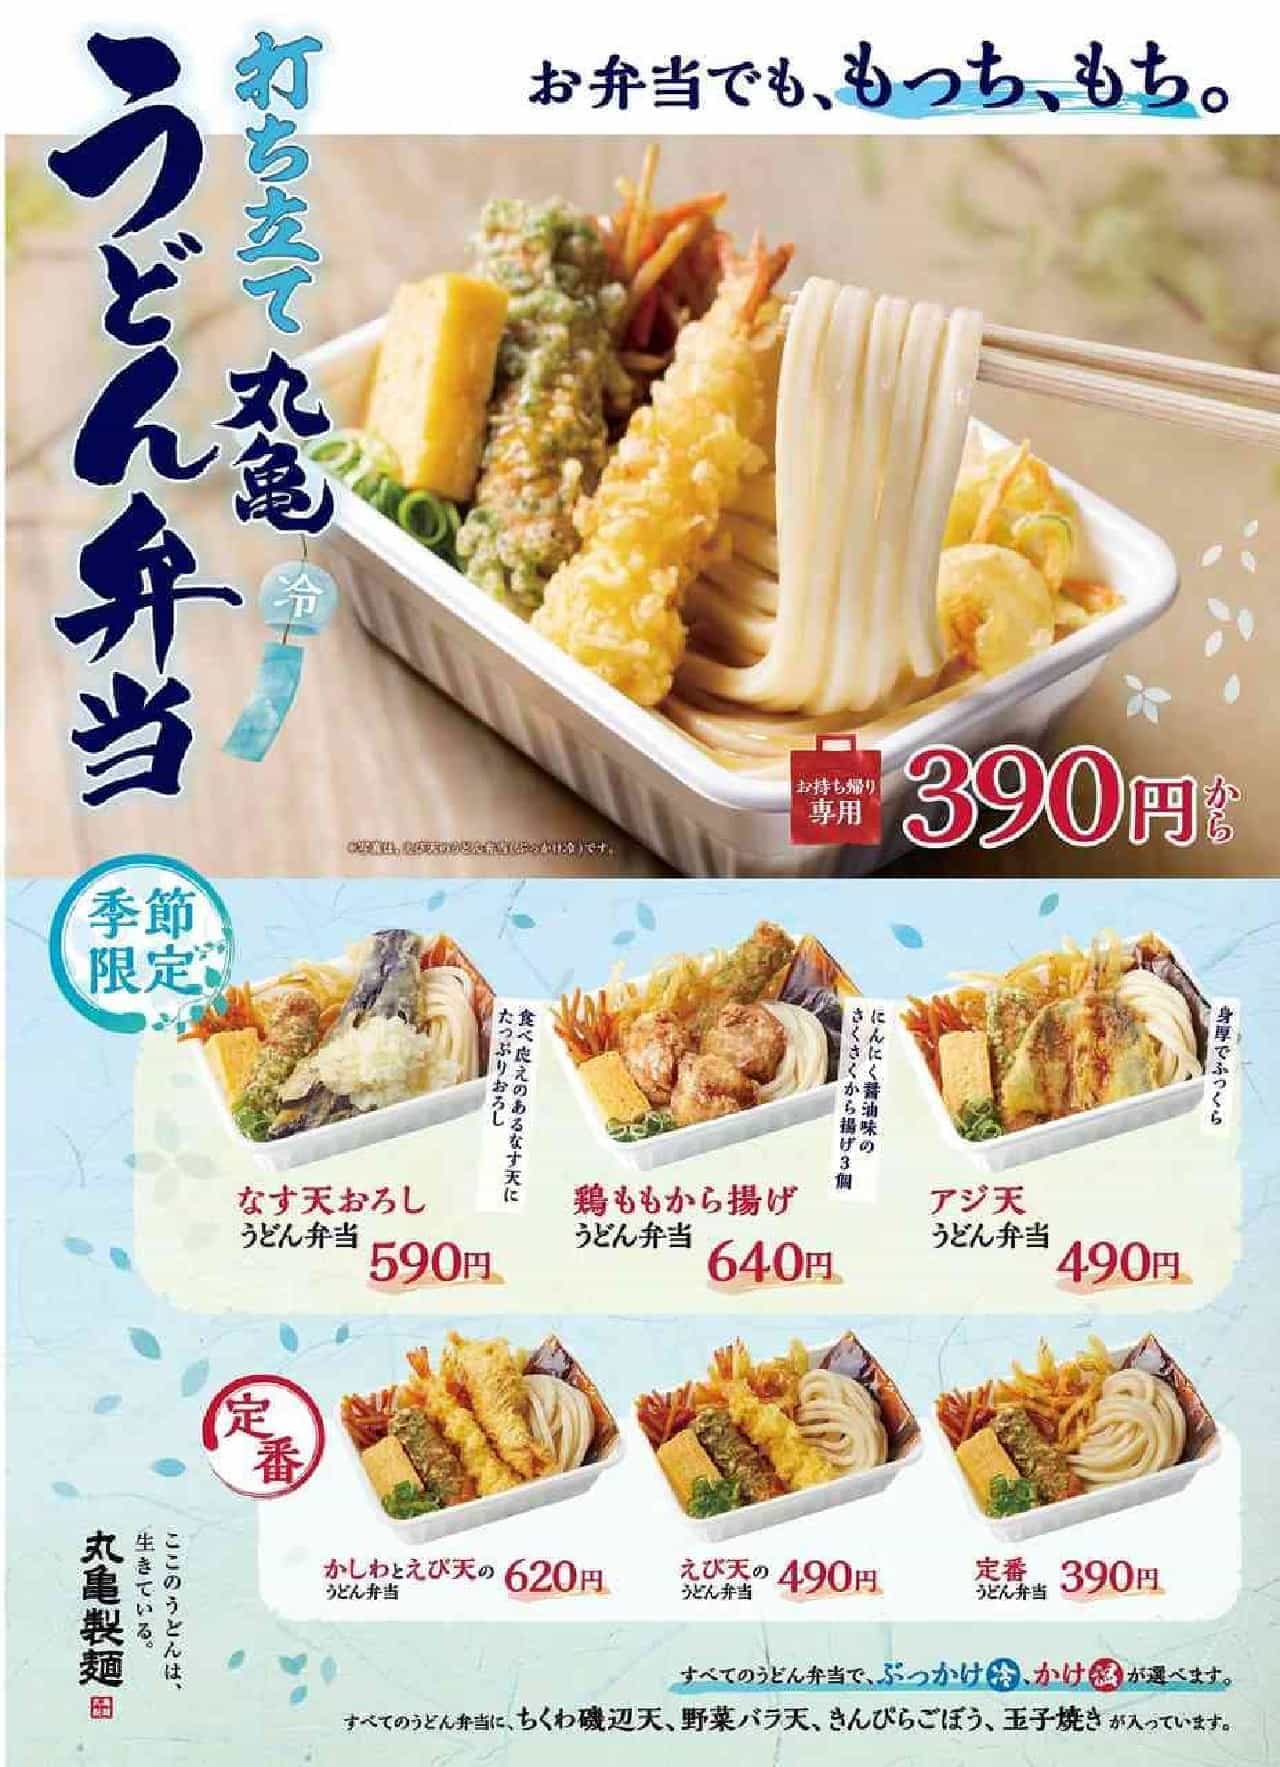 Marugame Seimen "Eggplant tempura udon bento with grated radish", "Chicken momo karaage udon bento", "Horse mackerel tempura udon bento